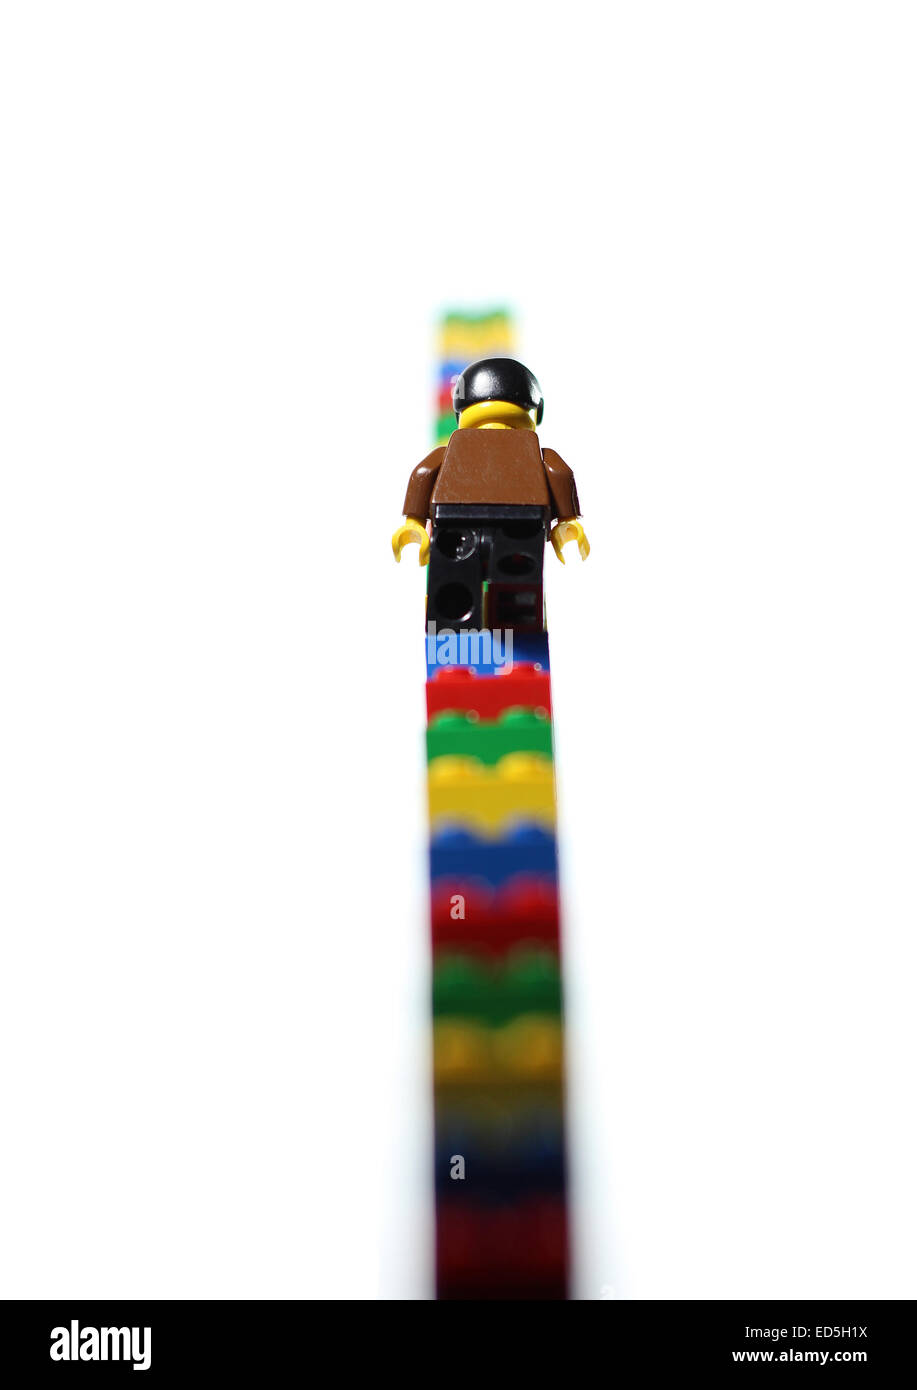 Lego figure climbing lego stairs. Rising. Stock Photo